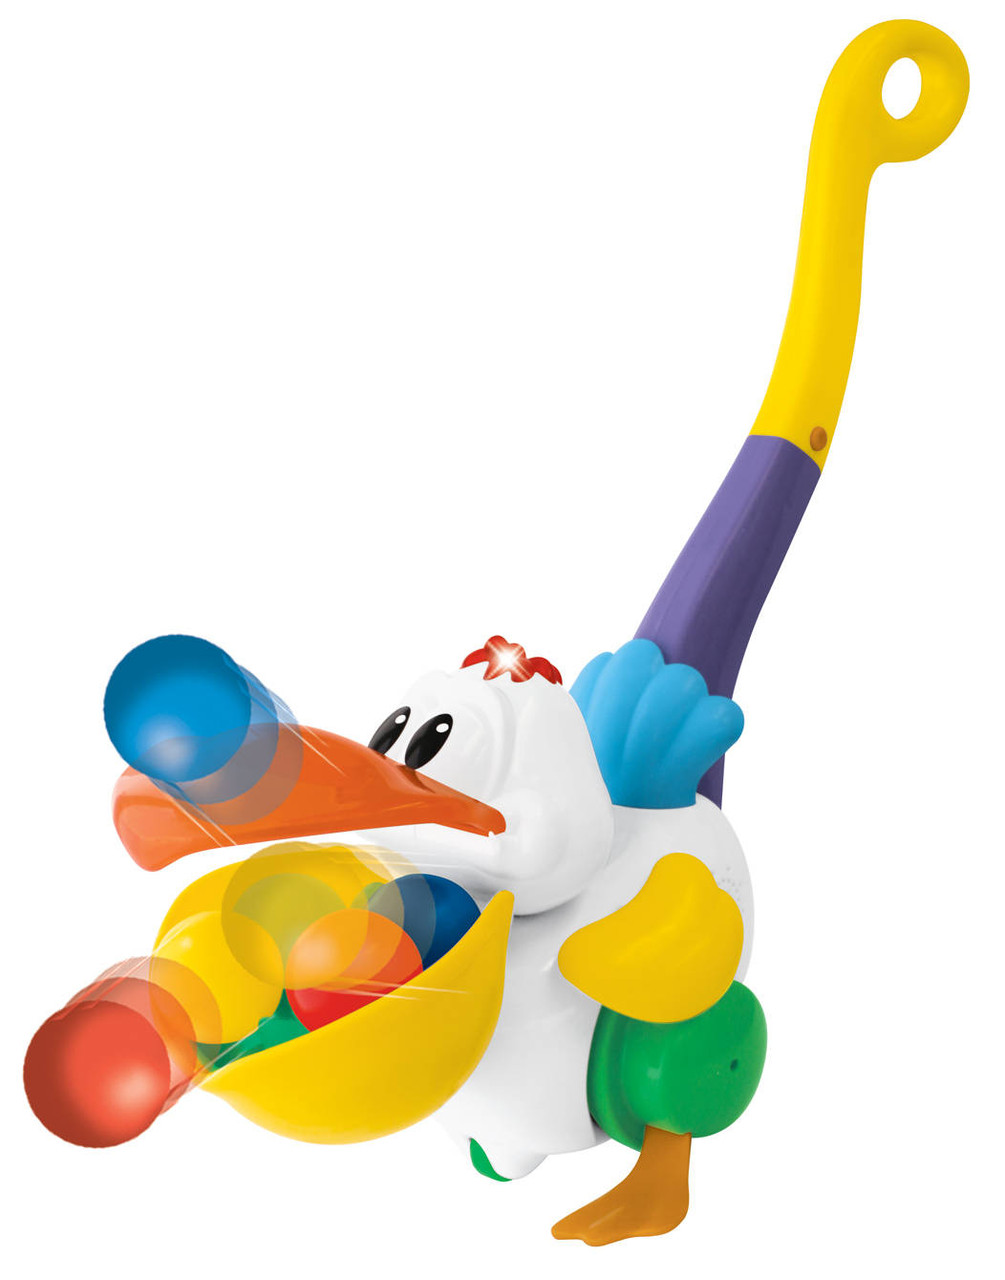 Іграшка Каталка Пелікан фірми "Kiddieland"